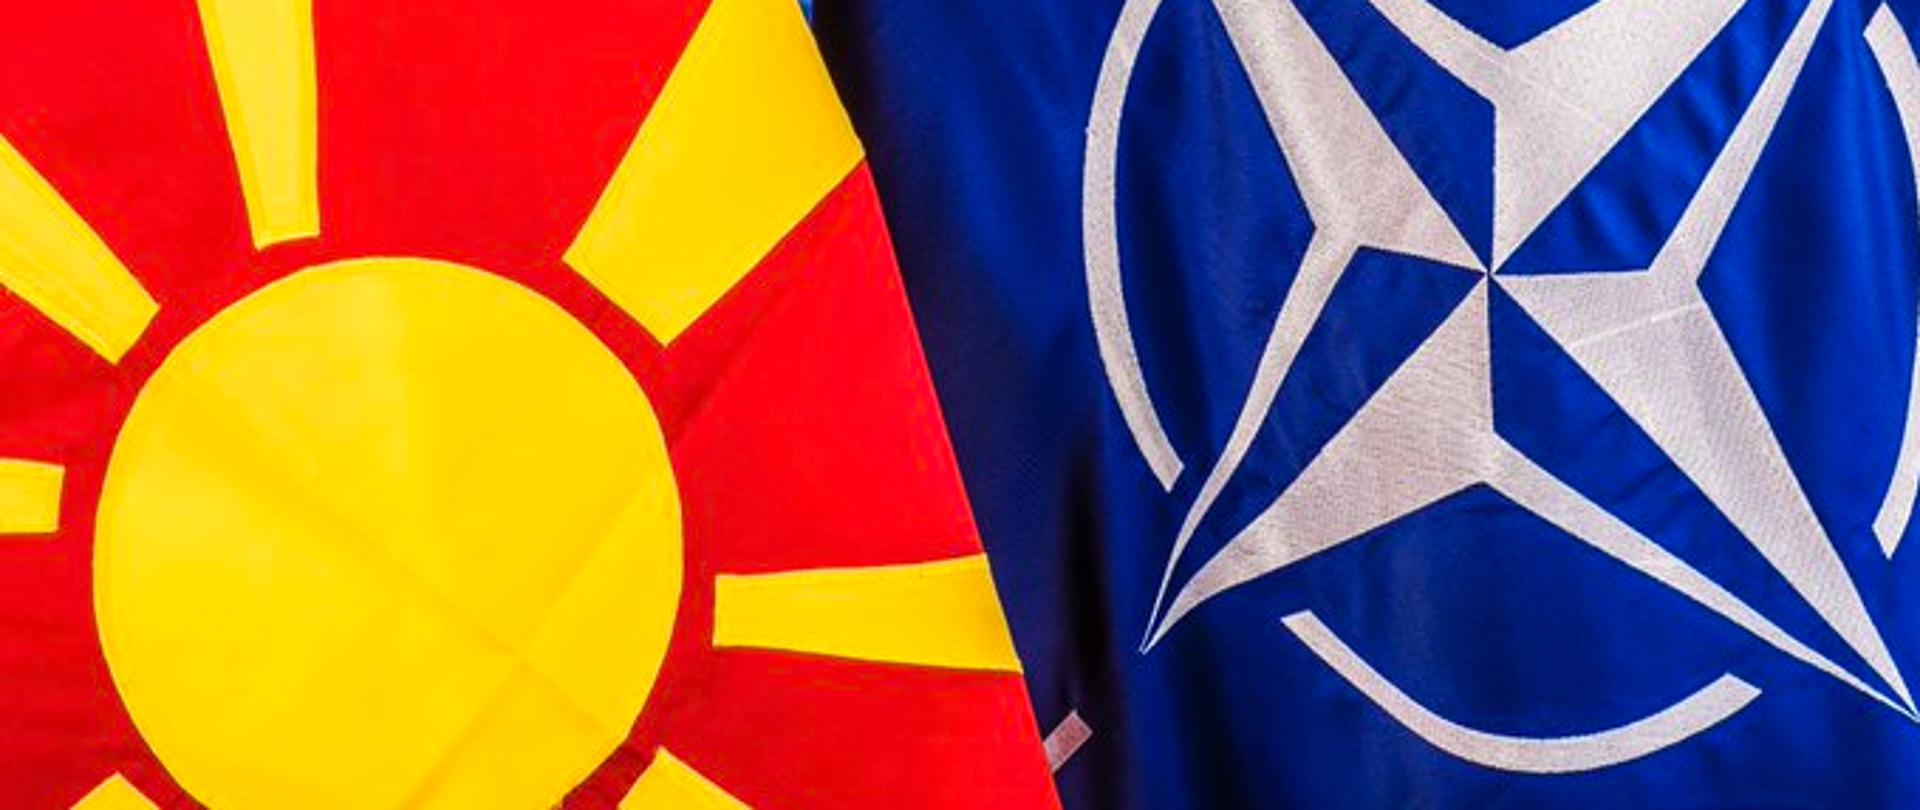 Accession of North Macedonia to NATO_27 March 2020